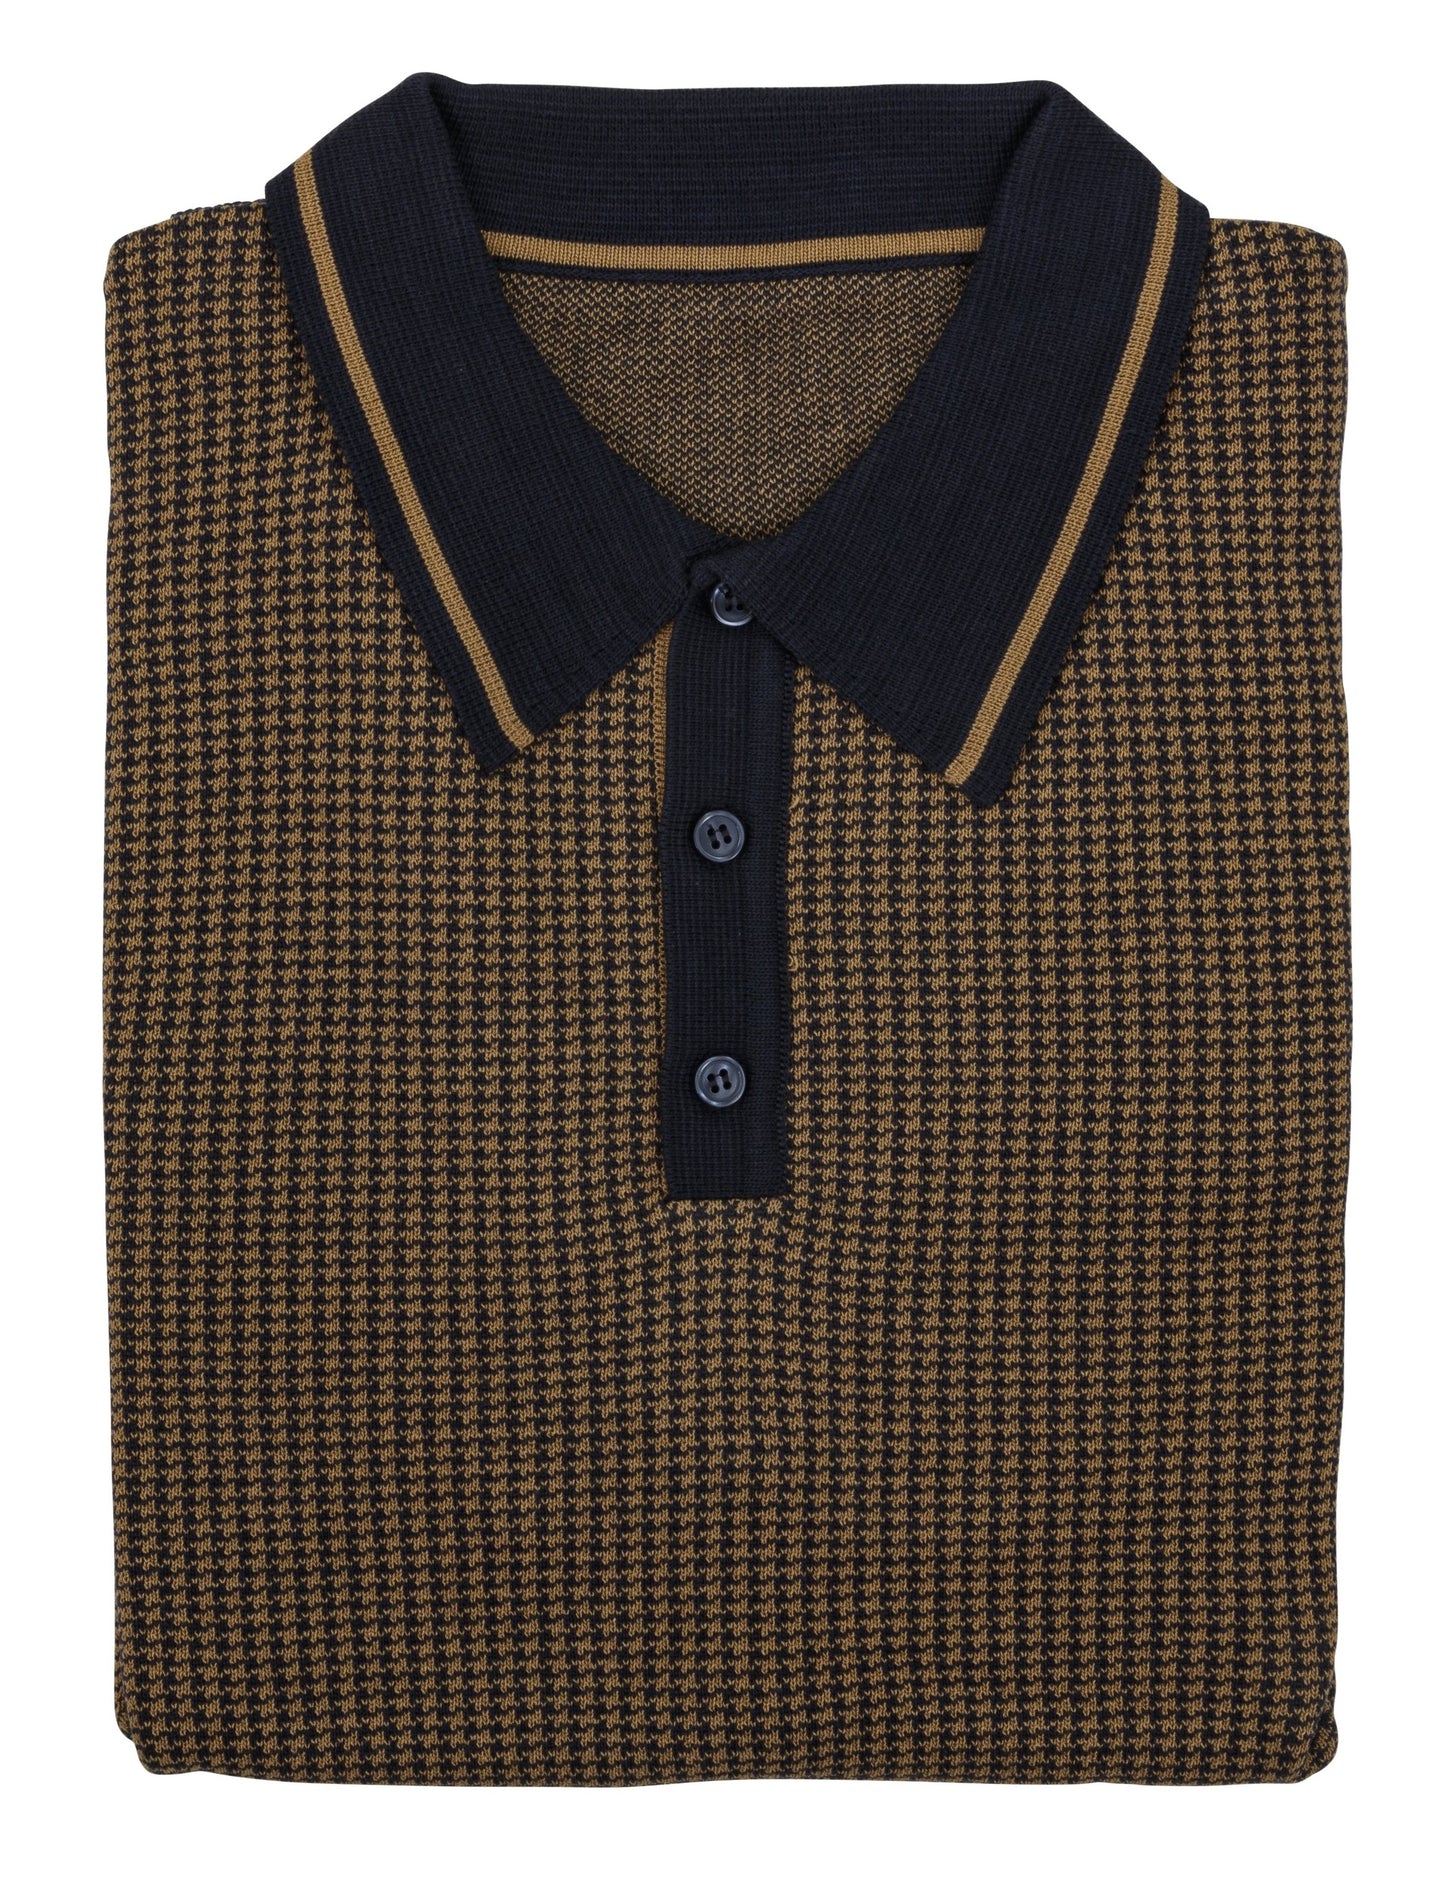 Relco Mens Navy/Caramel Retro Jacquard Dogtooth Knitted Polo Shirts